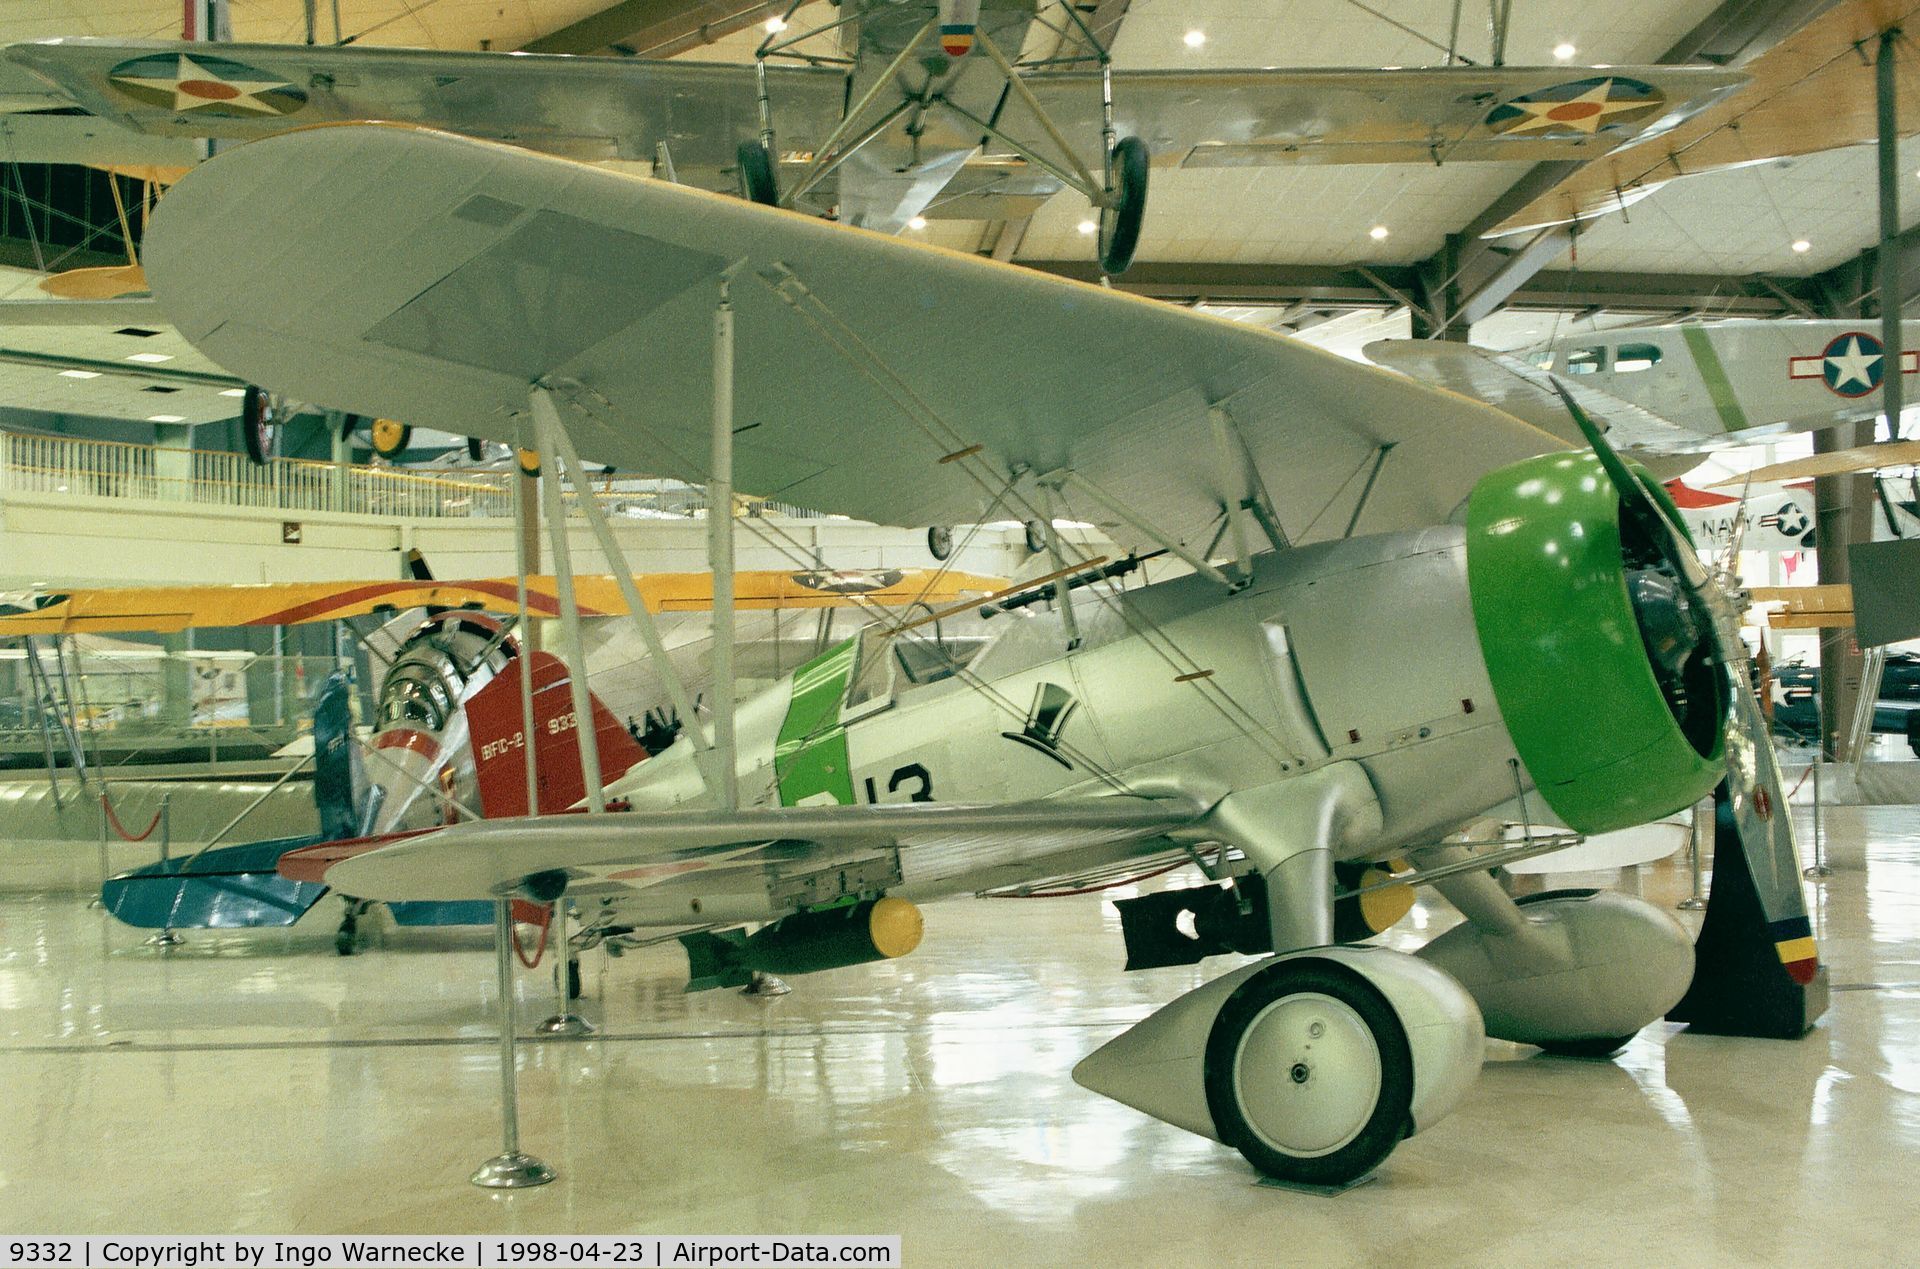 9332, 1937 Curtiss BFC-2 Goshawk C/N Not found 9332, Curtiss BFC-2 Goshawk at the Museum of Naval Aviation, Pensacola FL